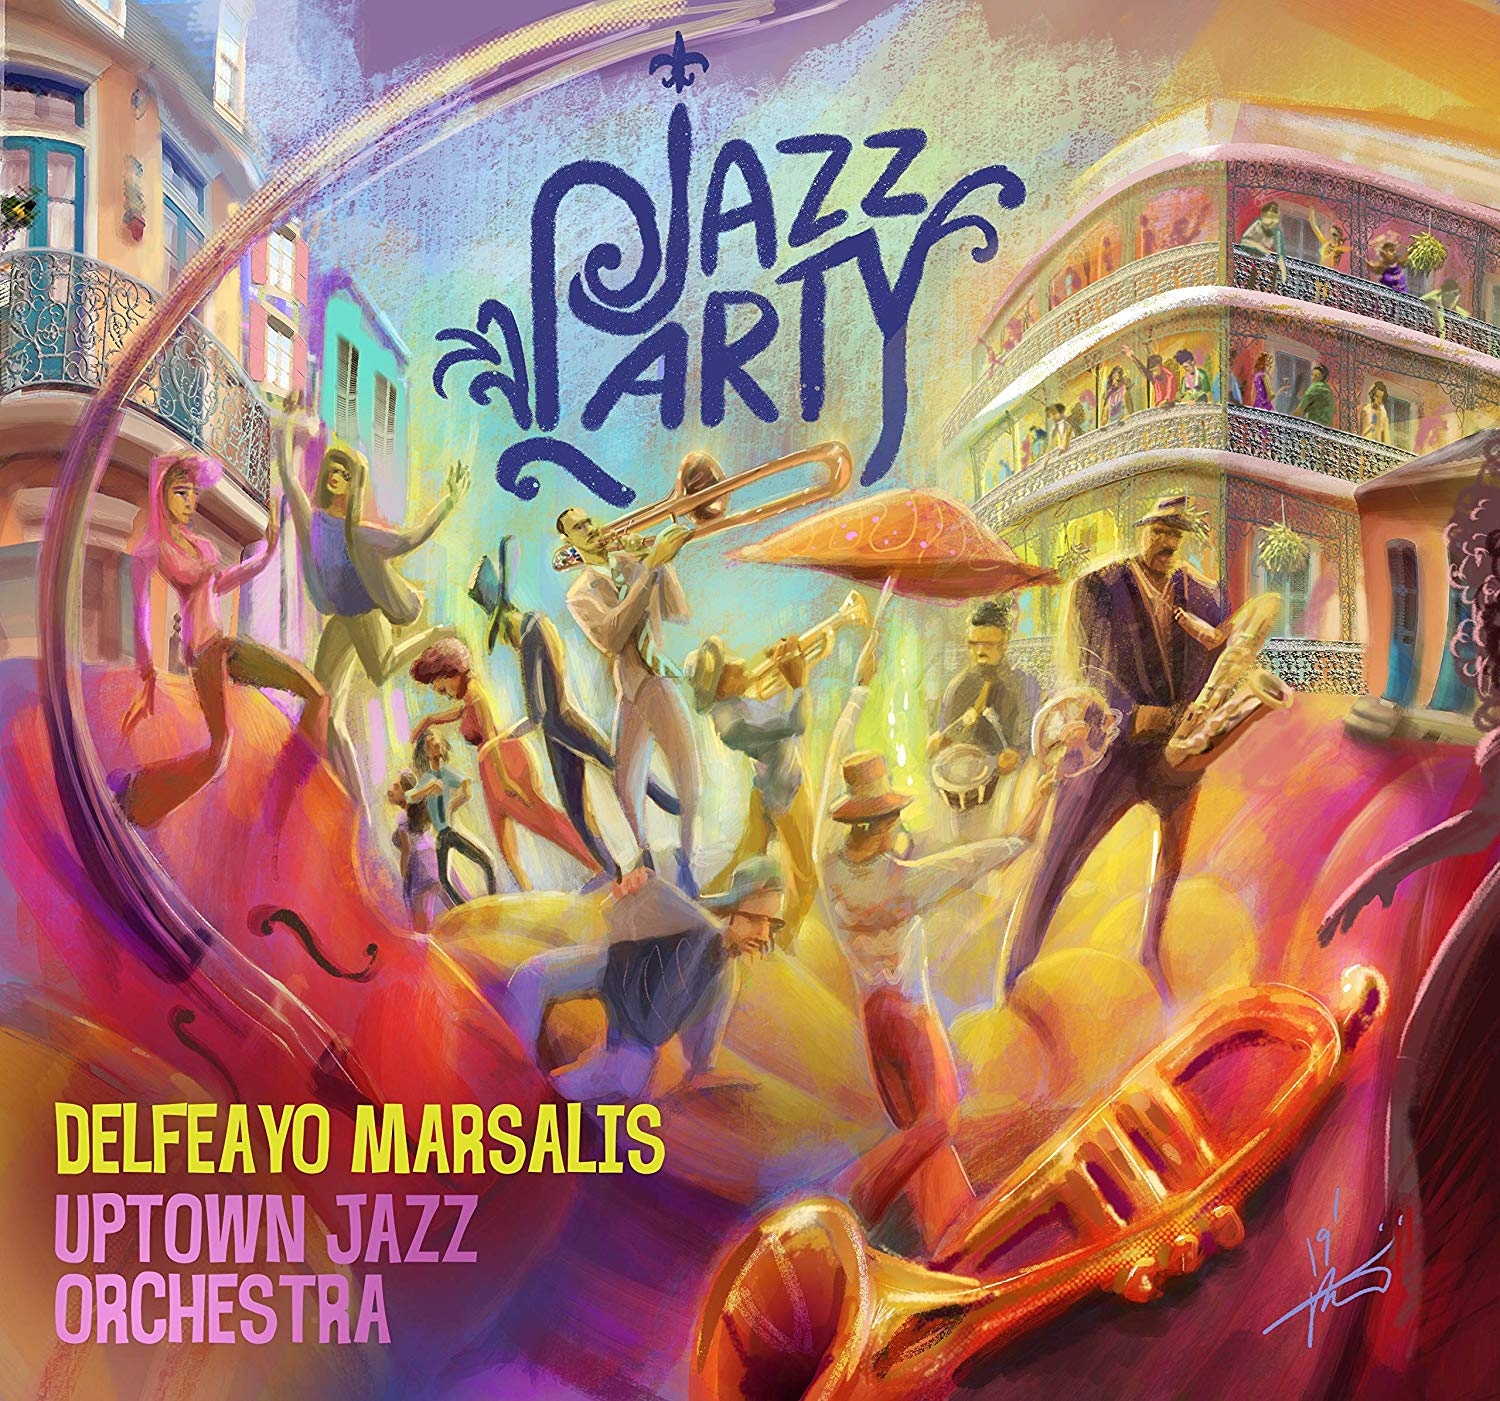 DELFEAYO MARSALIS - Delfeayo Marsalis & The Uptown Jazz Orchestra : Jazz Party cover 